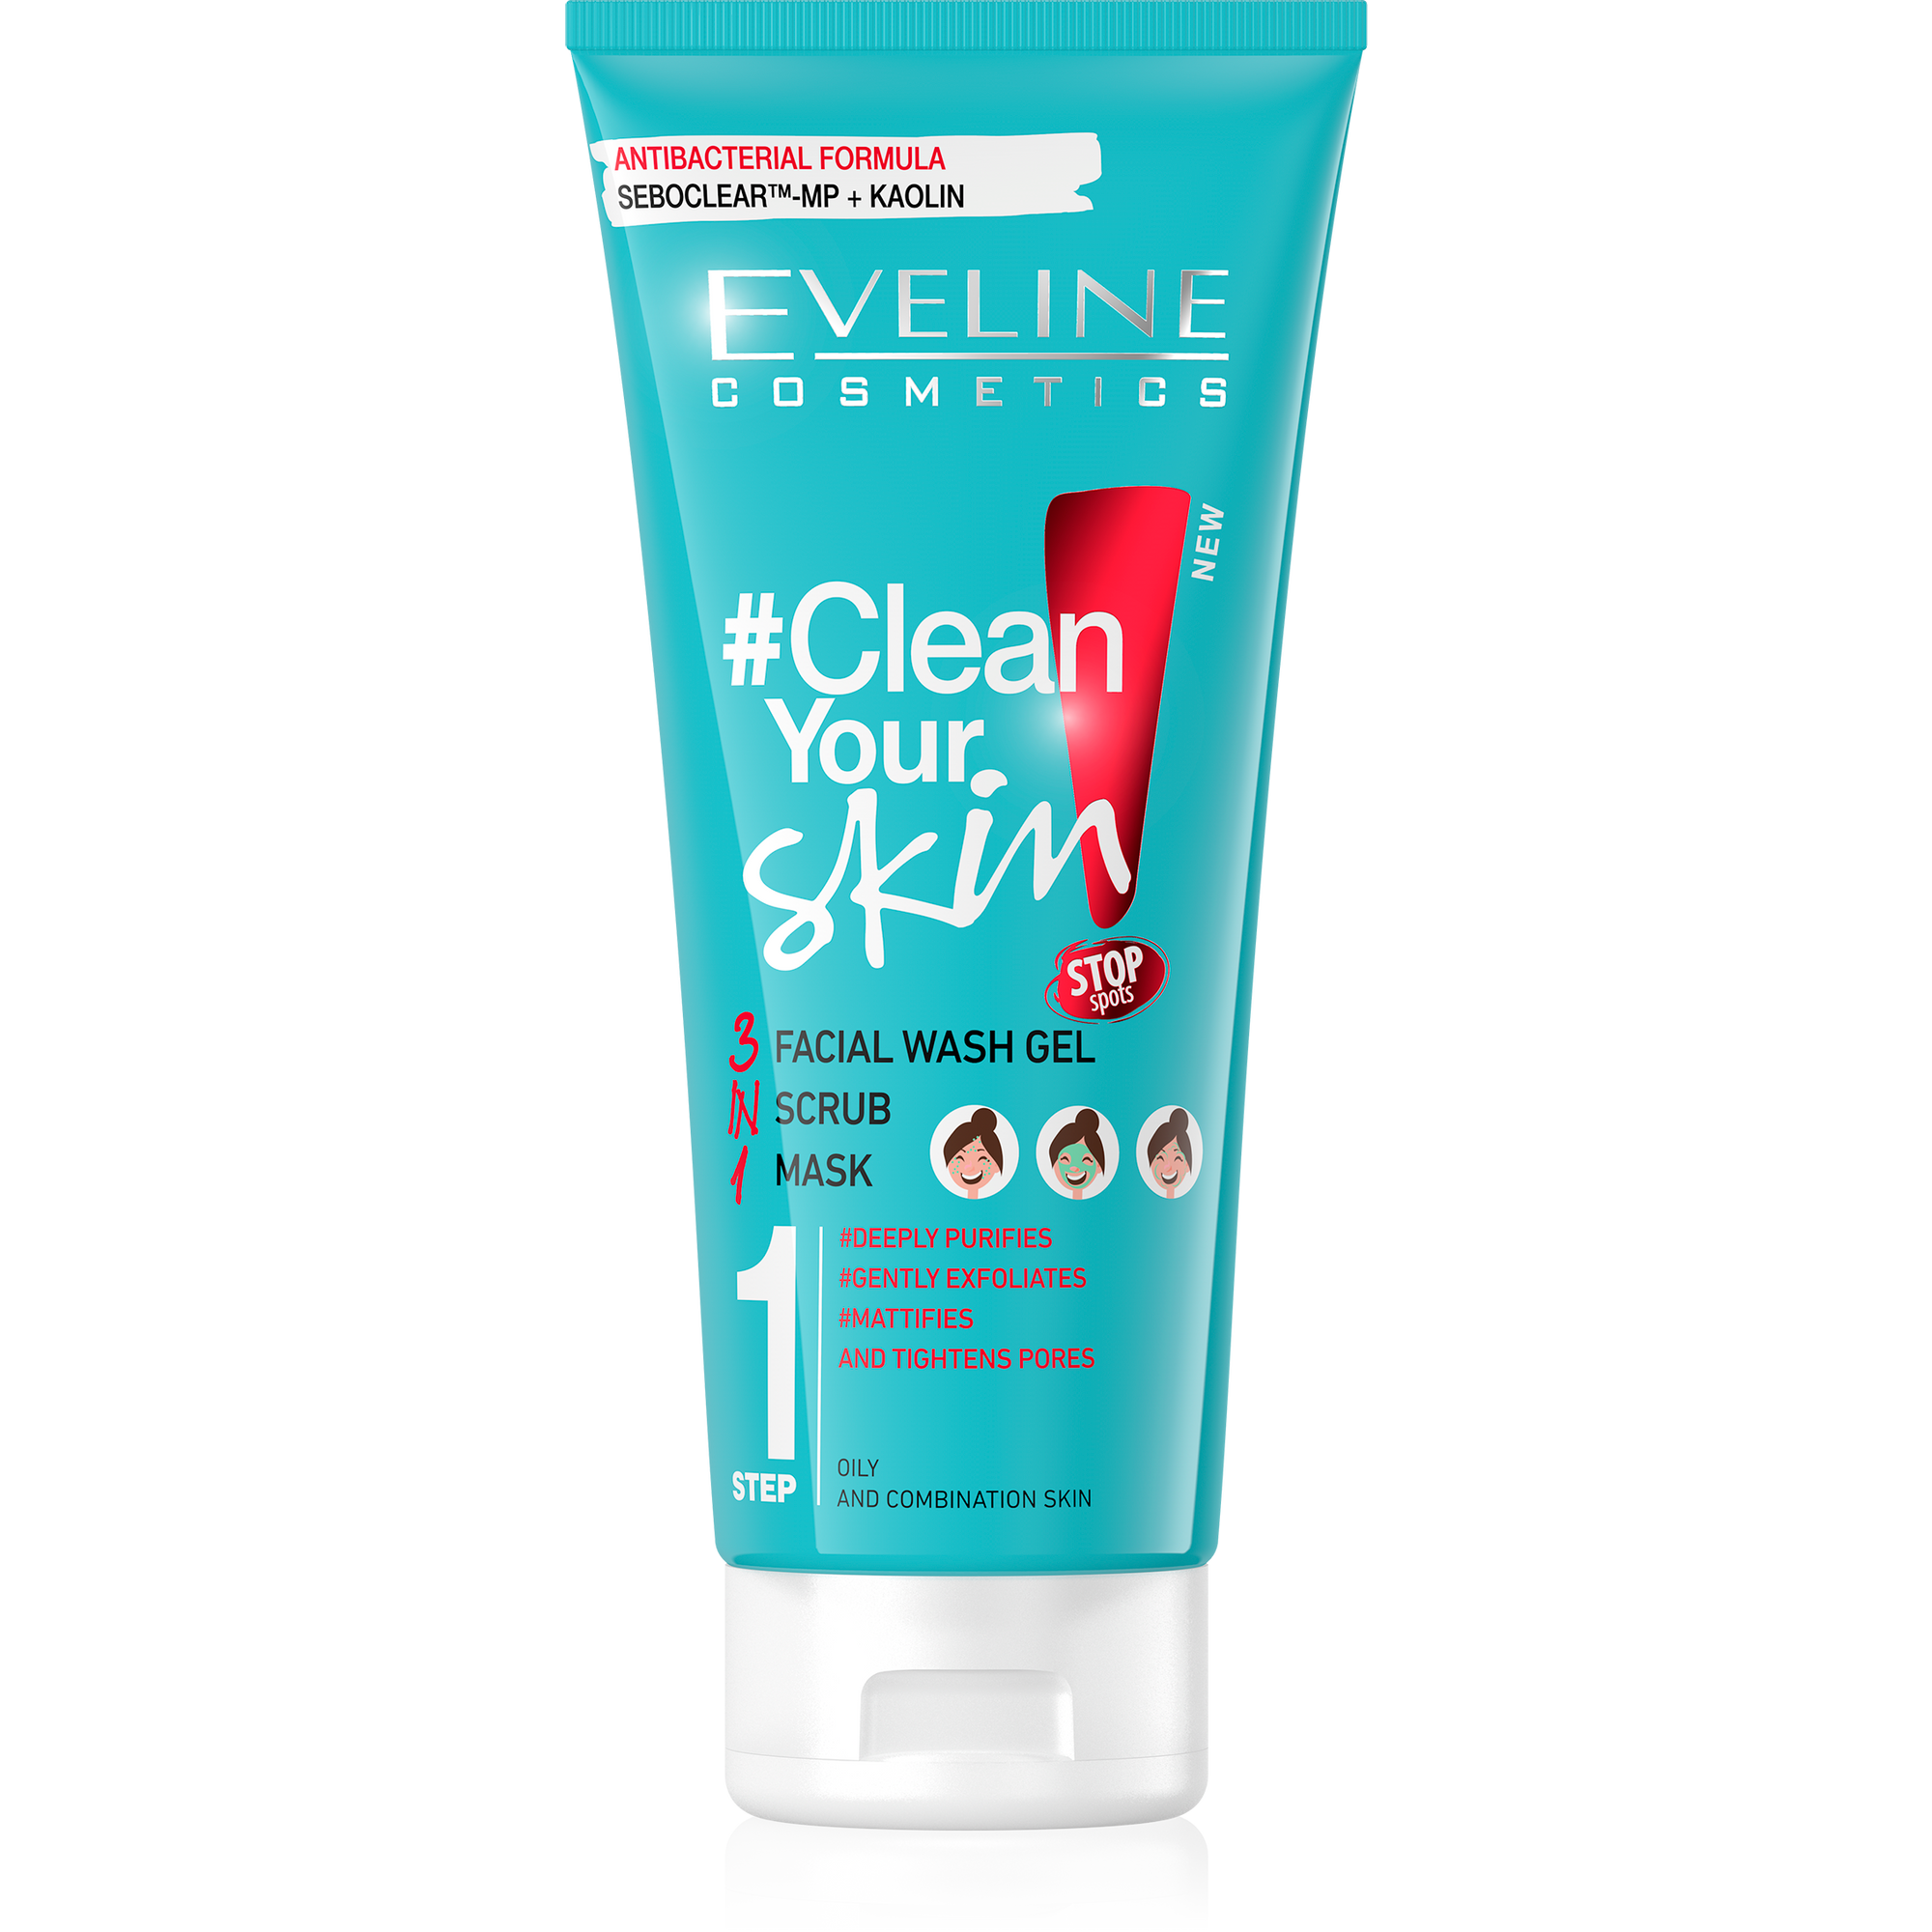 Clean Your Skin 3 in 1: Facial Wash Gel + Scrub + Mask